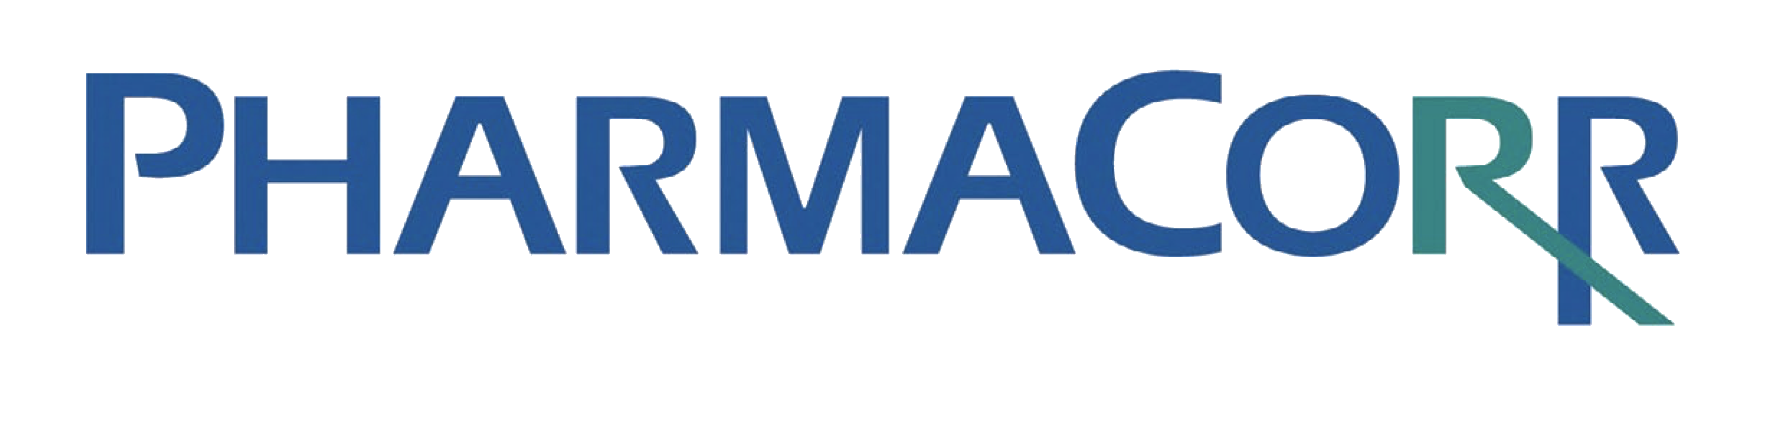 PharmaCorr-Logo-Fixed.png